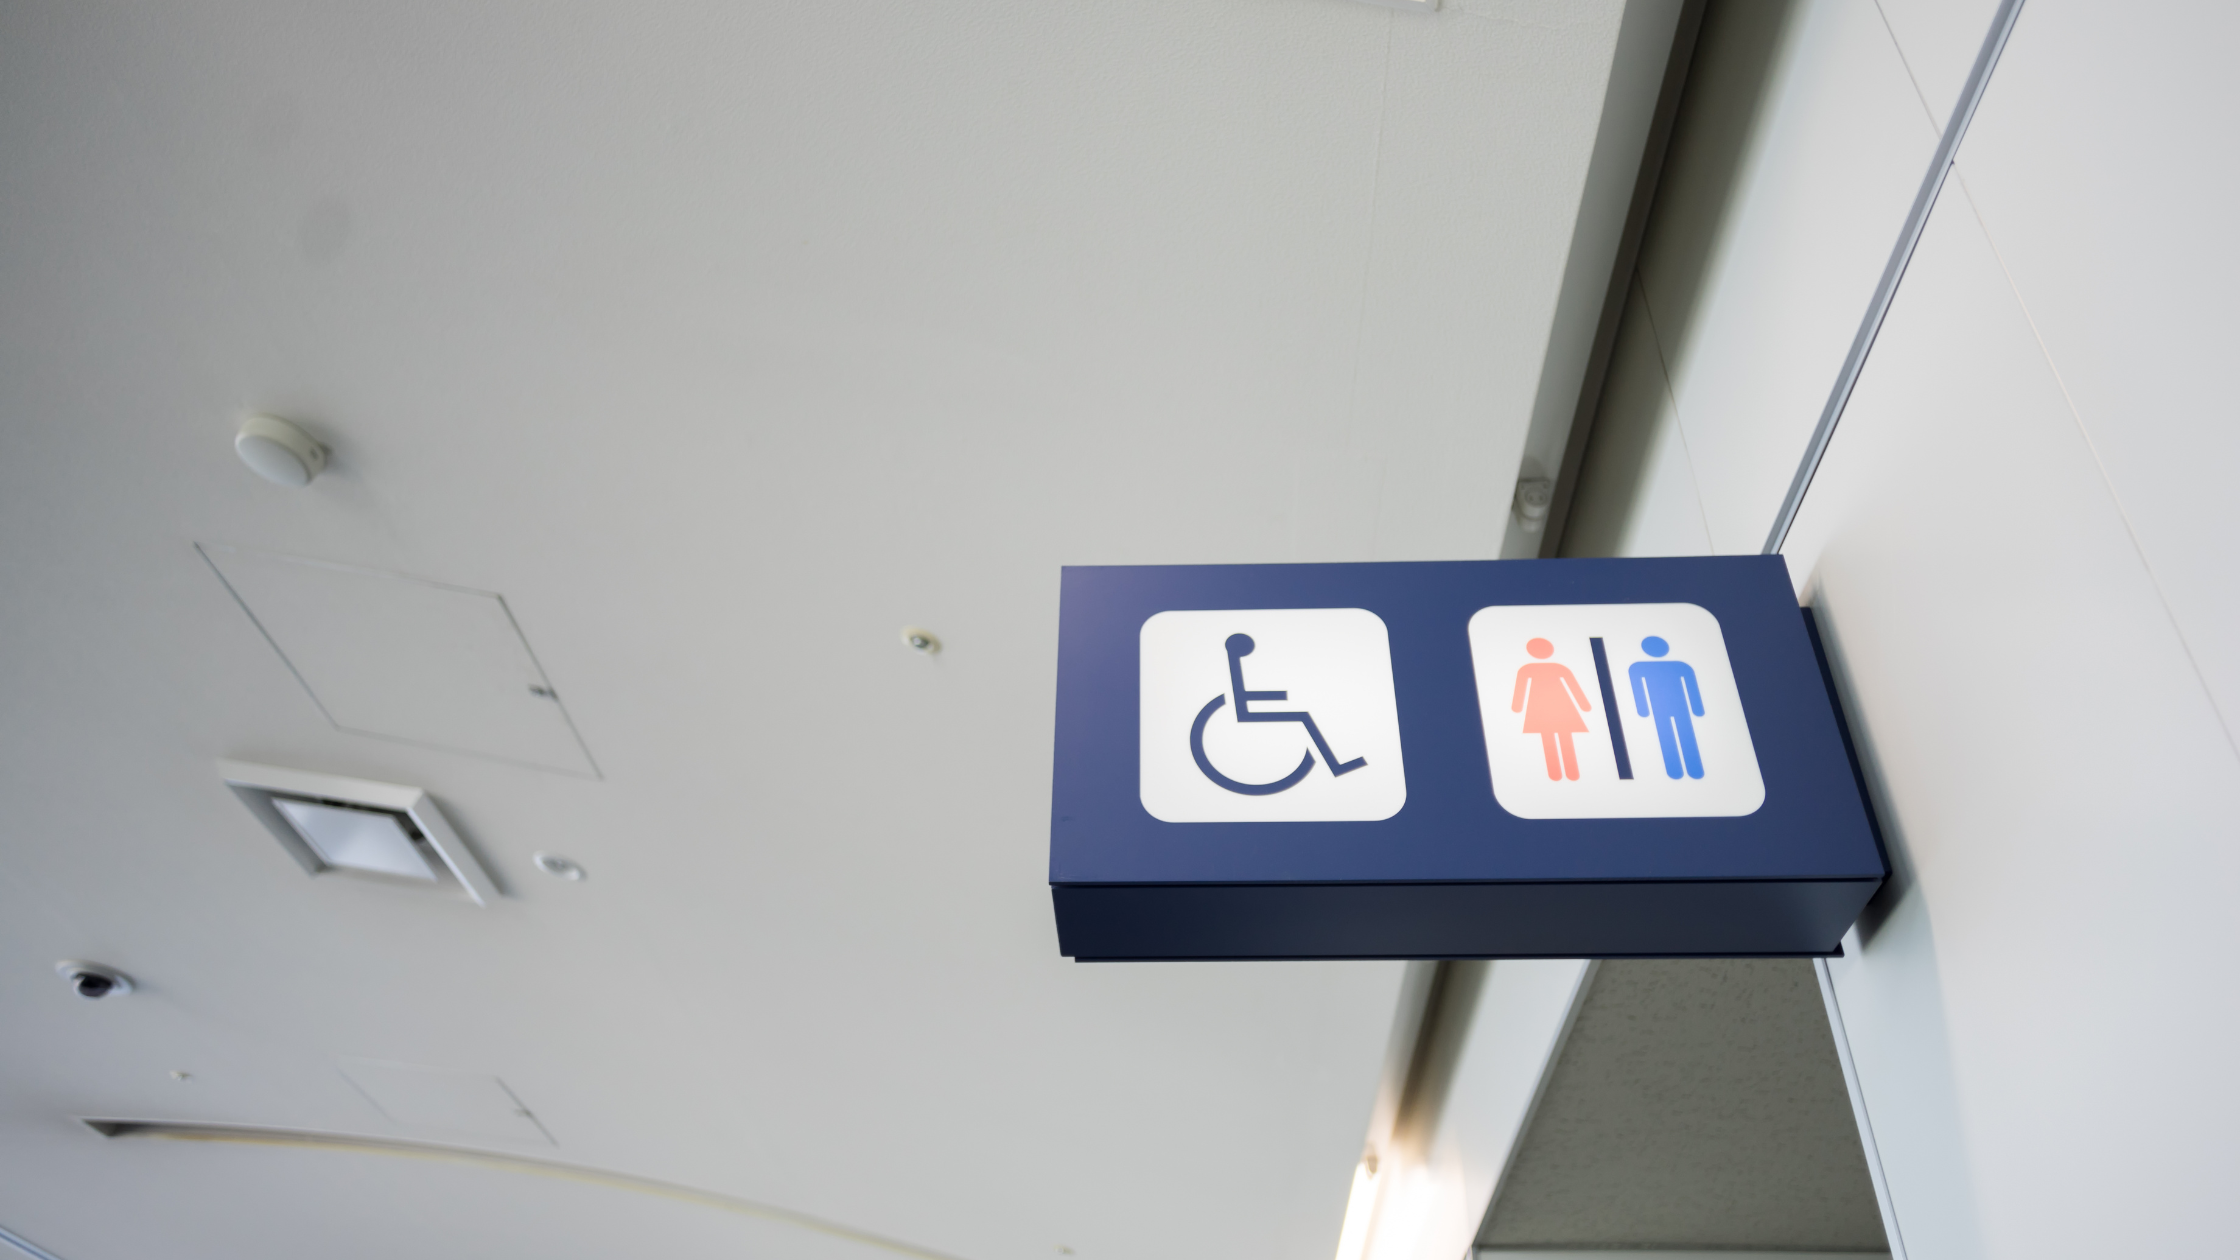 Public disability bathrooms